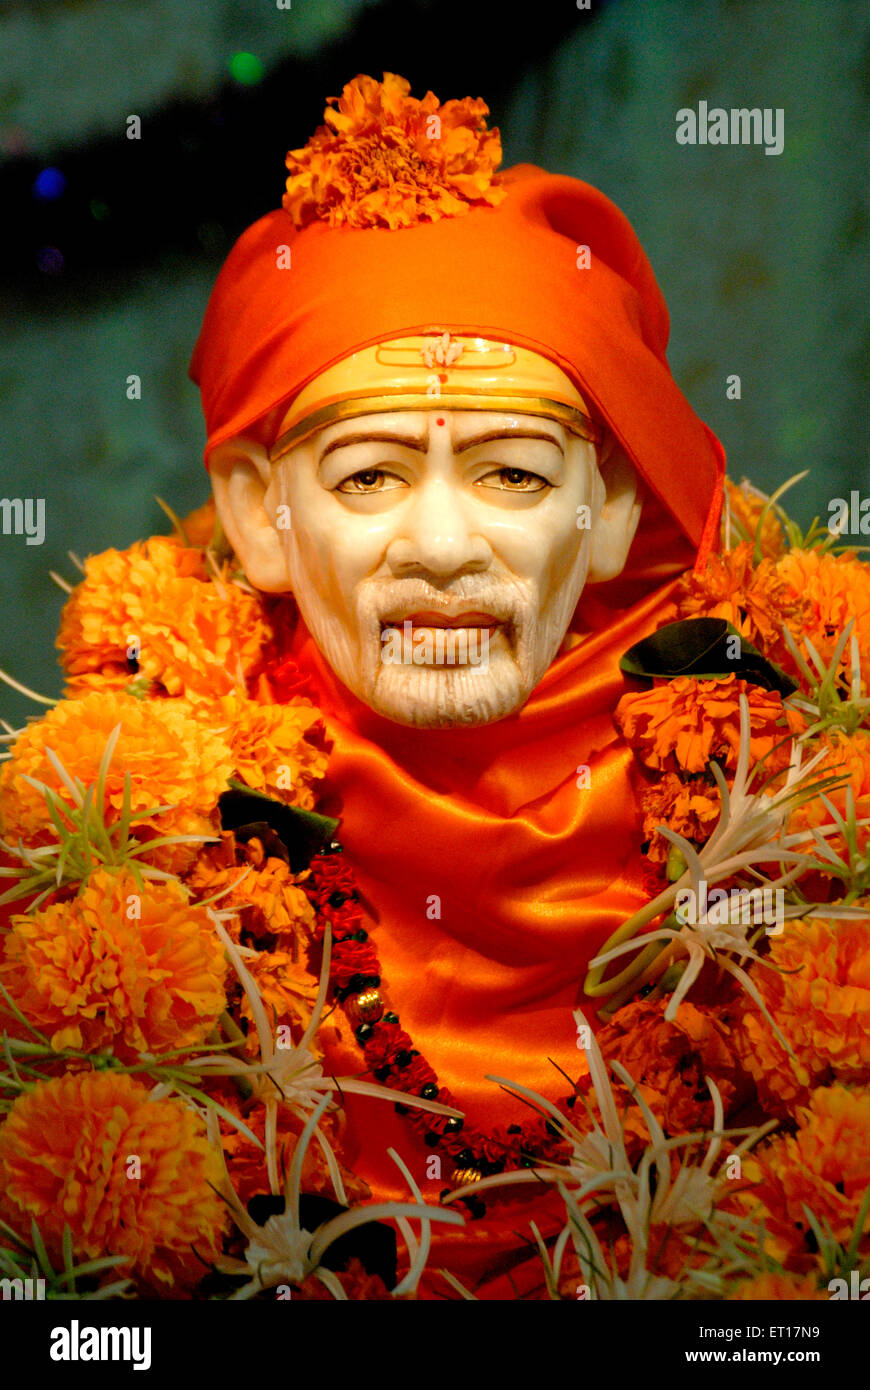 God saint idol of Sai Baba with orange shawl and turban Stock Photo